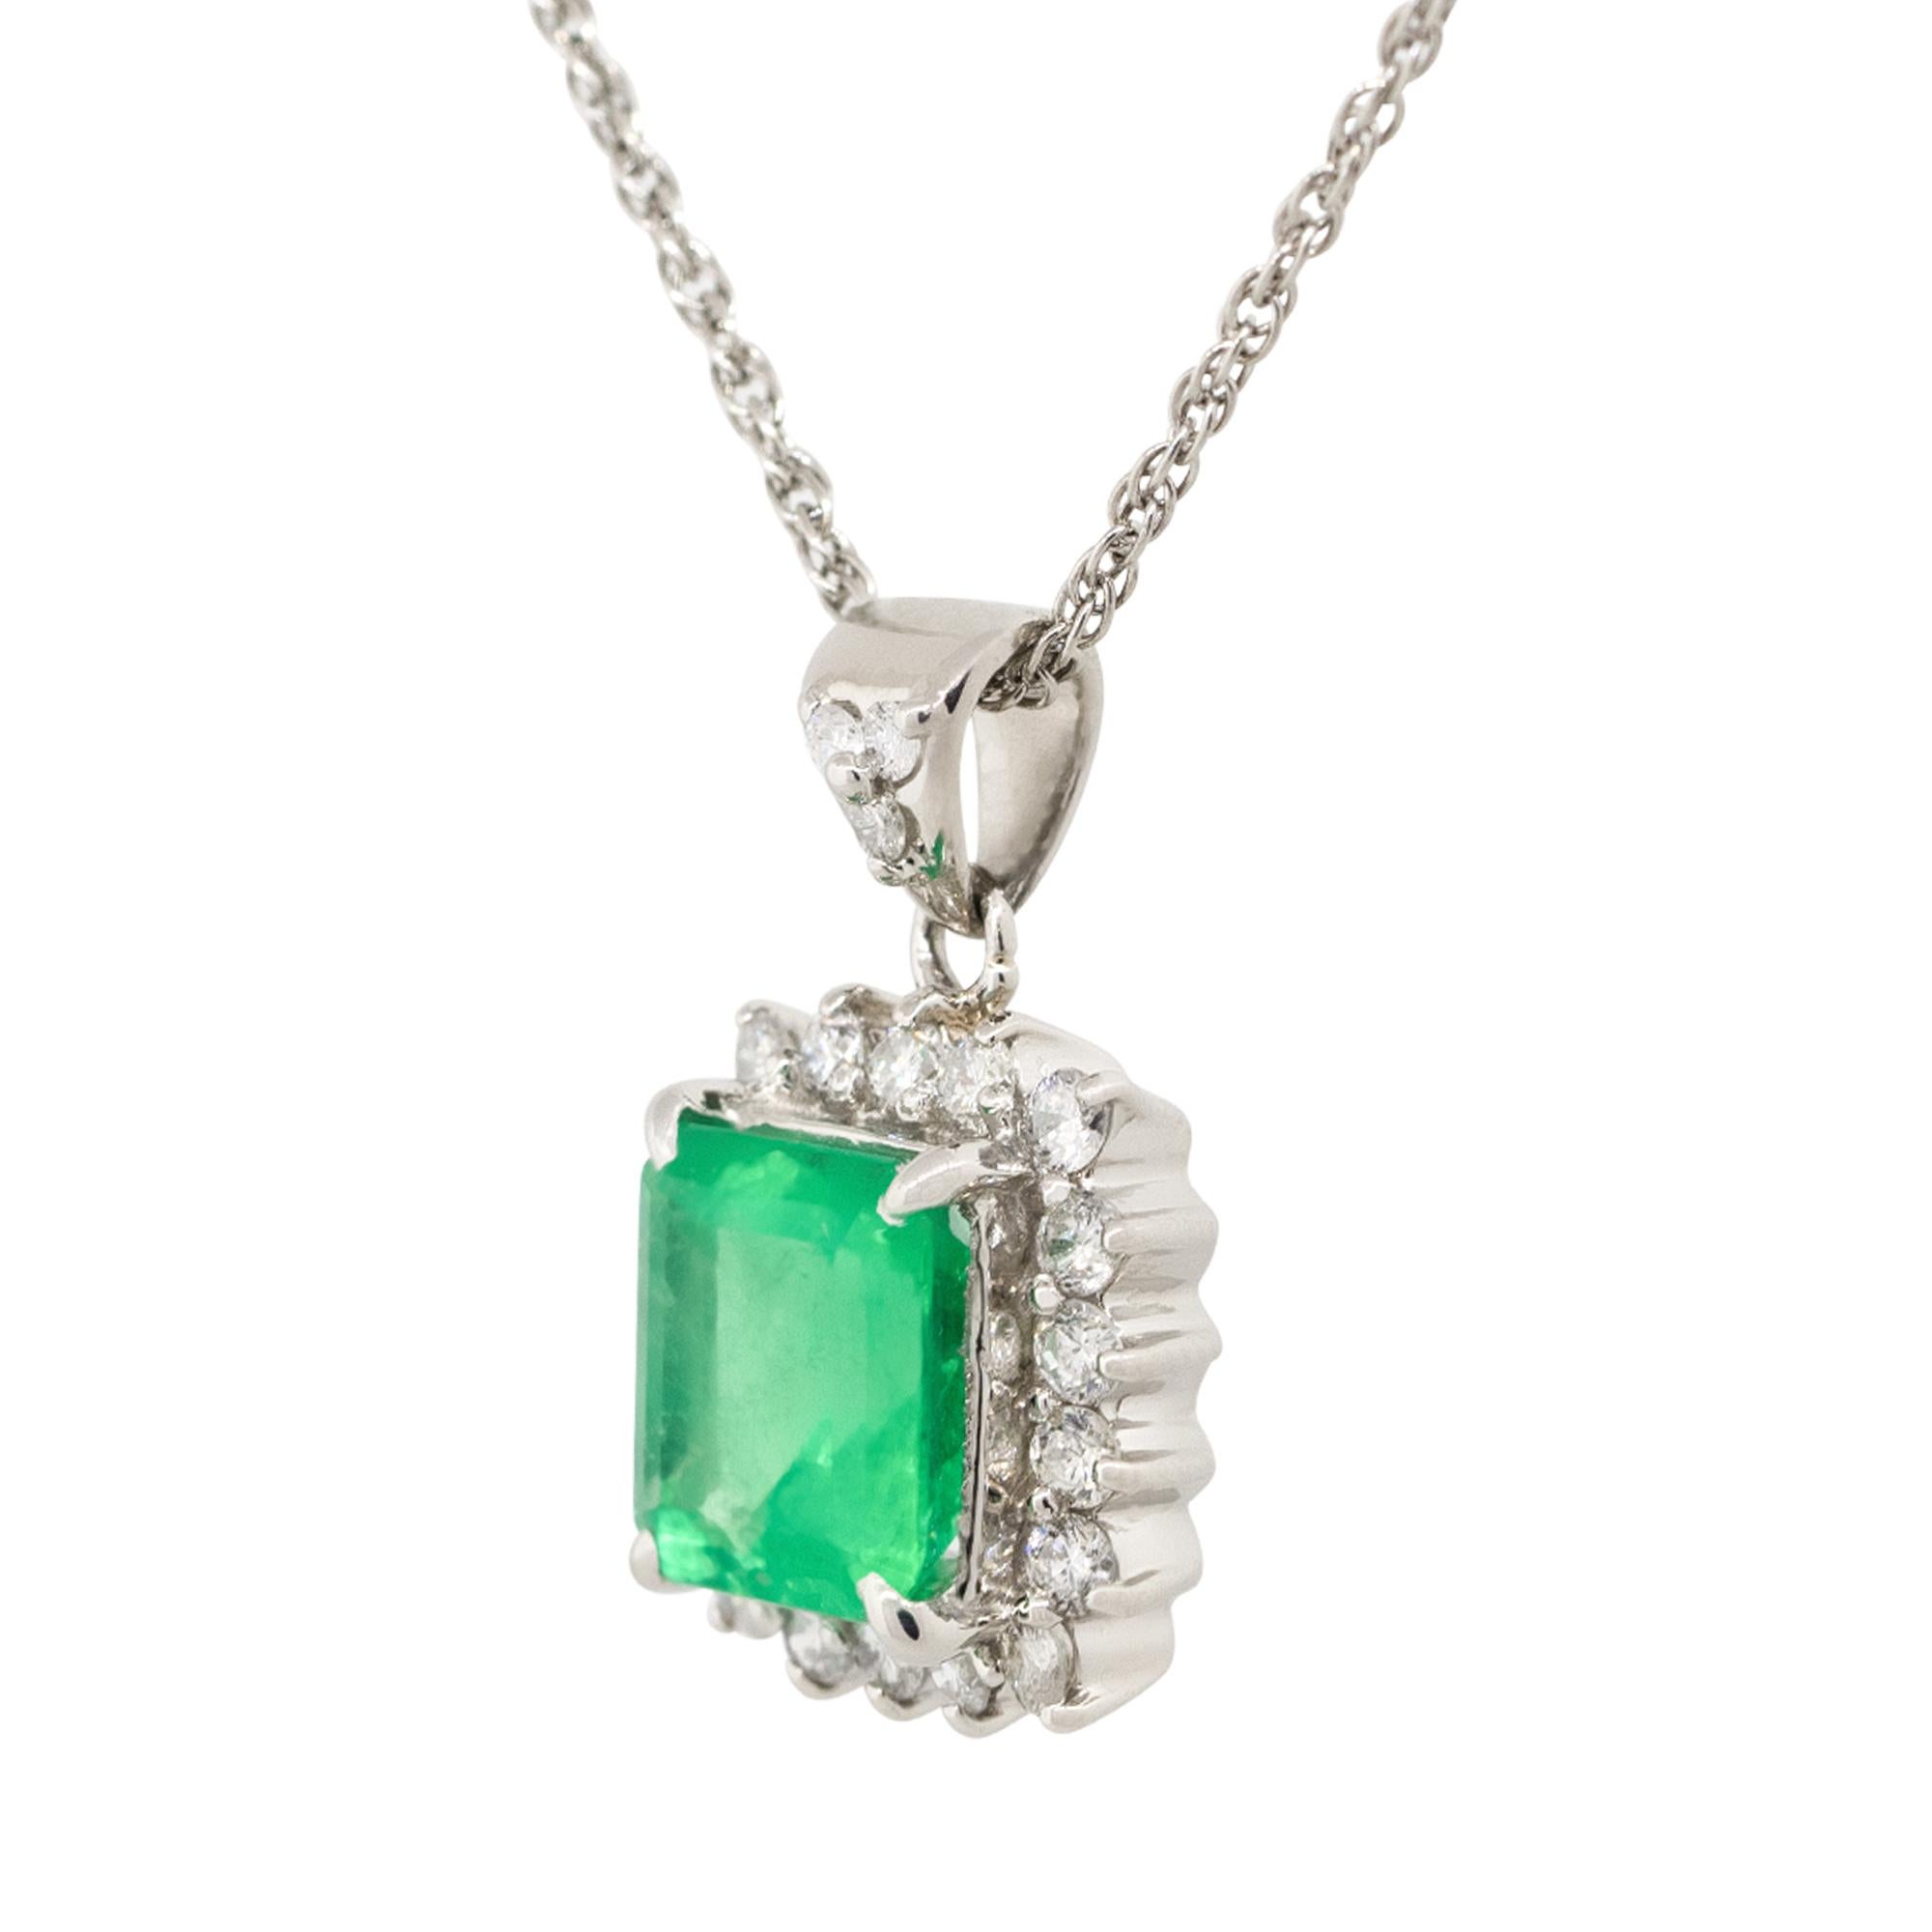 Emerald Cut 2.07 Carat Emerald with Diamond Halo Pendant Necklace Platinum in Stock